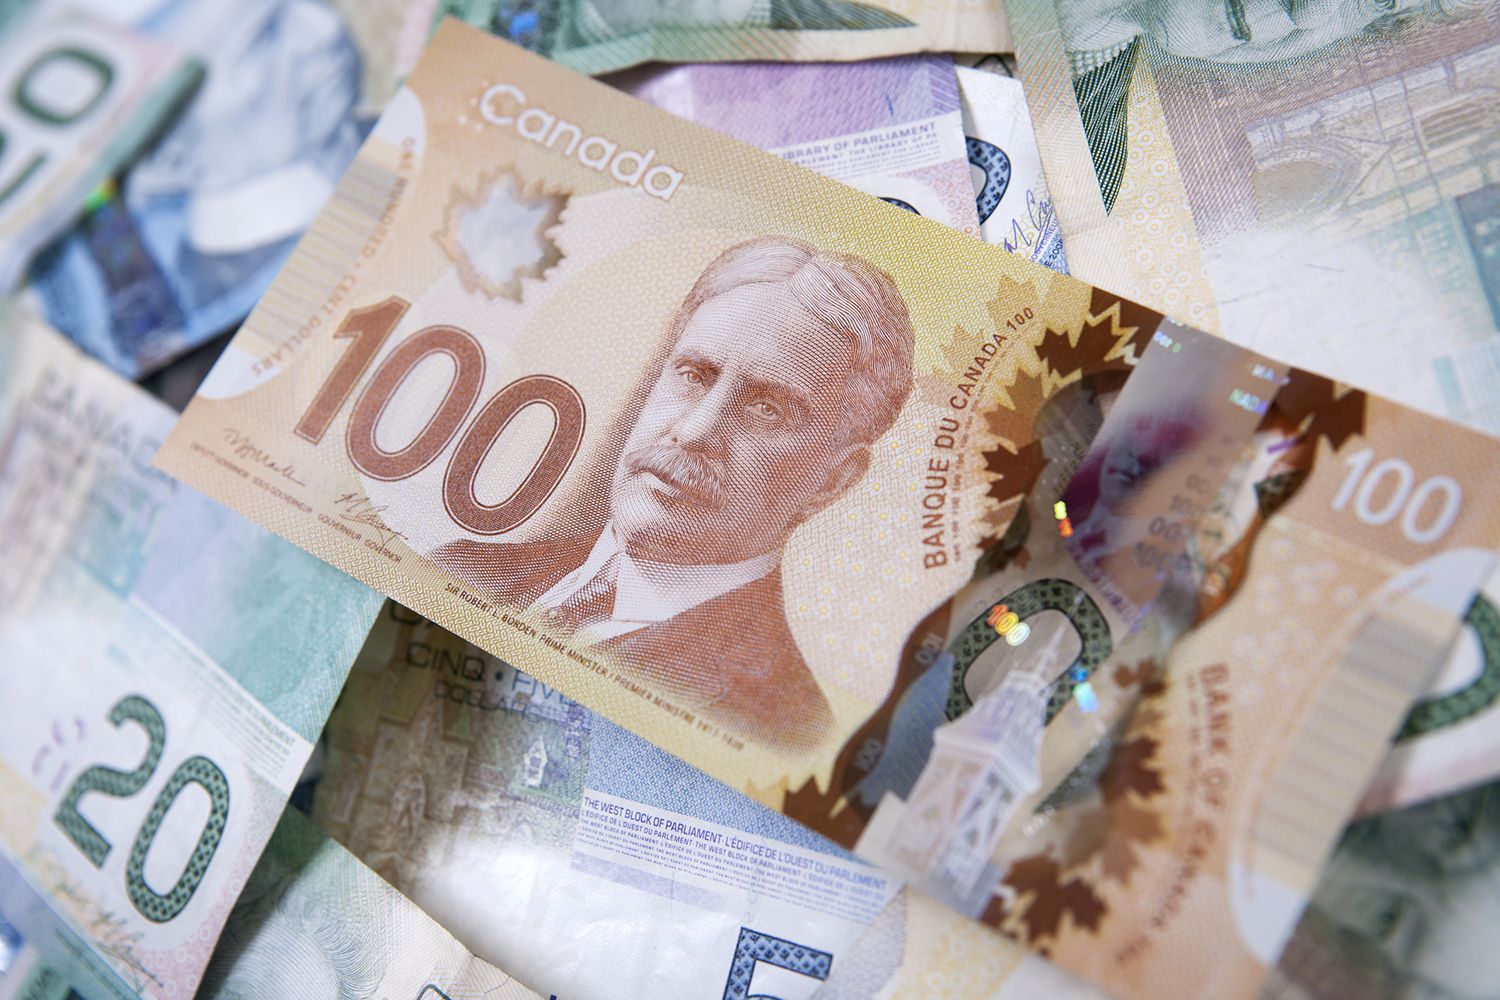 The Canadian dollar